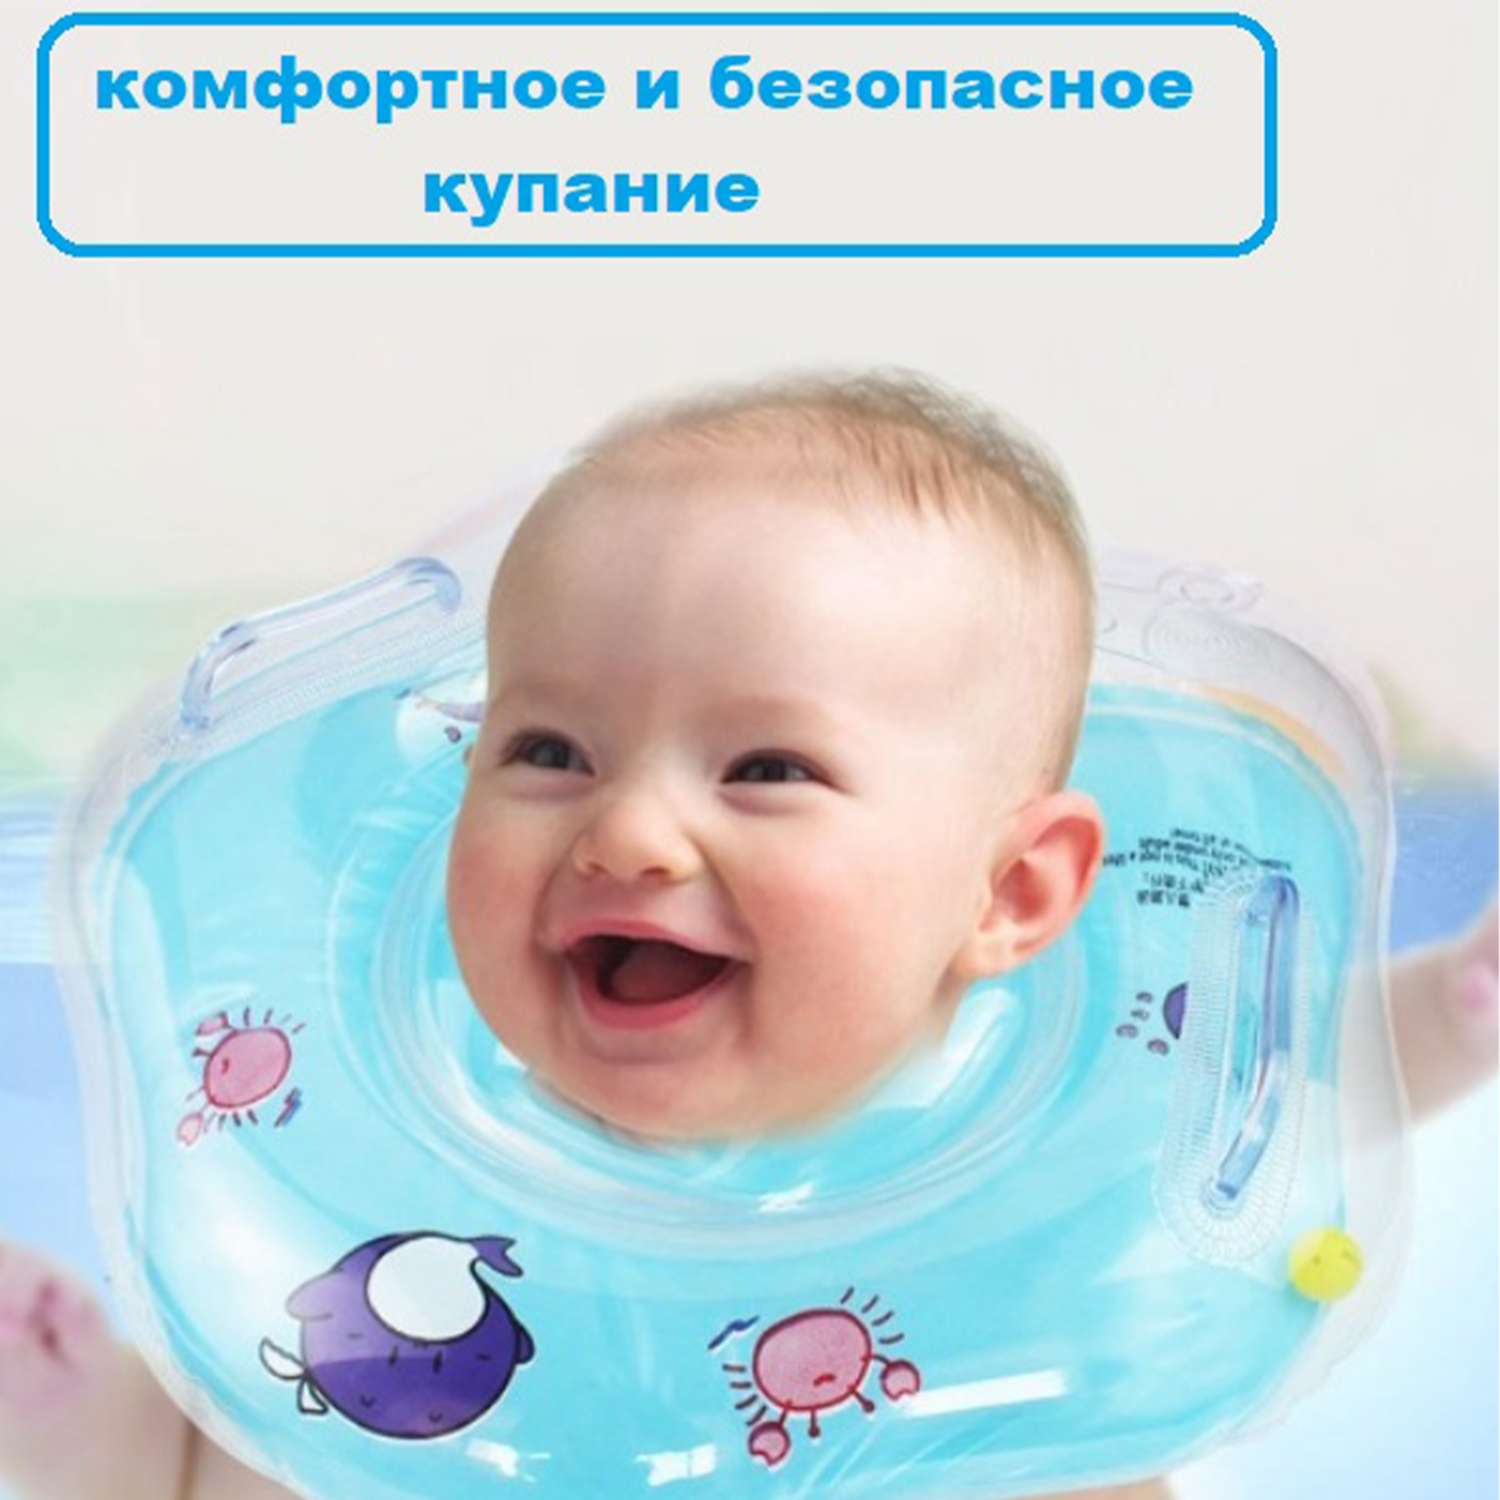 Надувной круг на шею SHARKTOYS для купания младенцев - фото 2